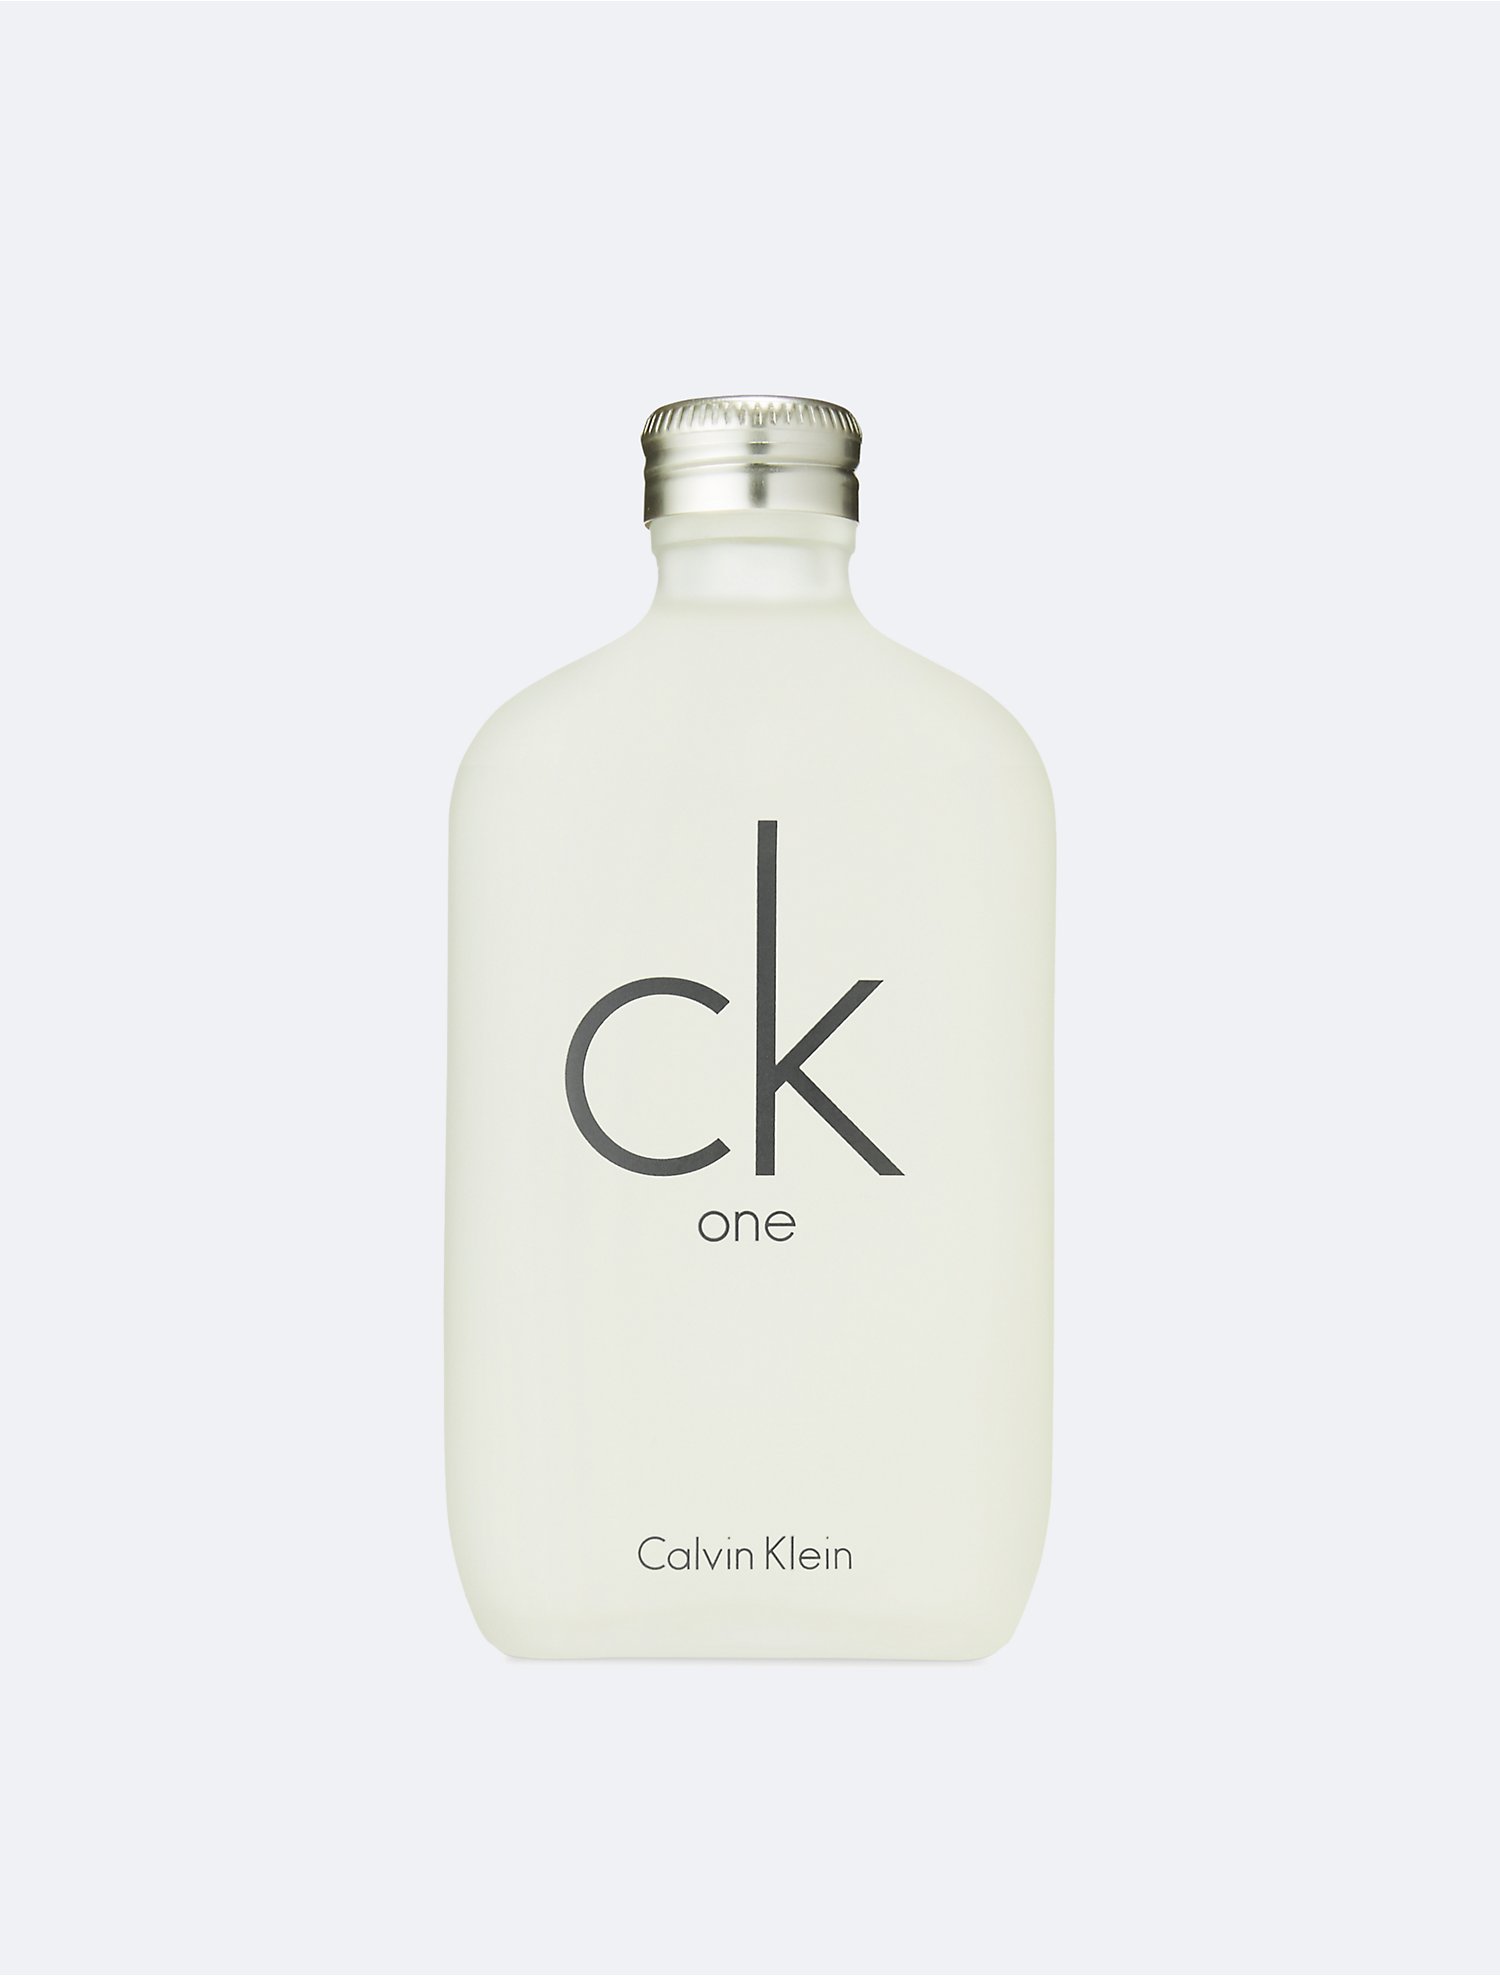 CK One. (Sumber foto: Calvin Klein)